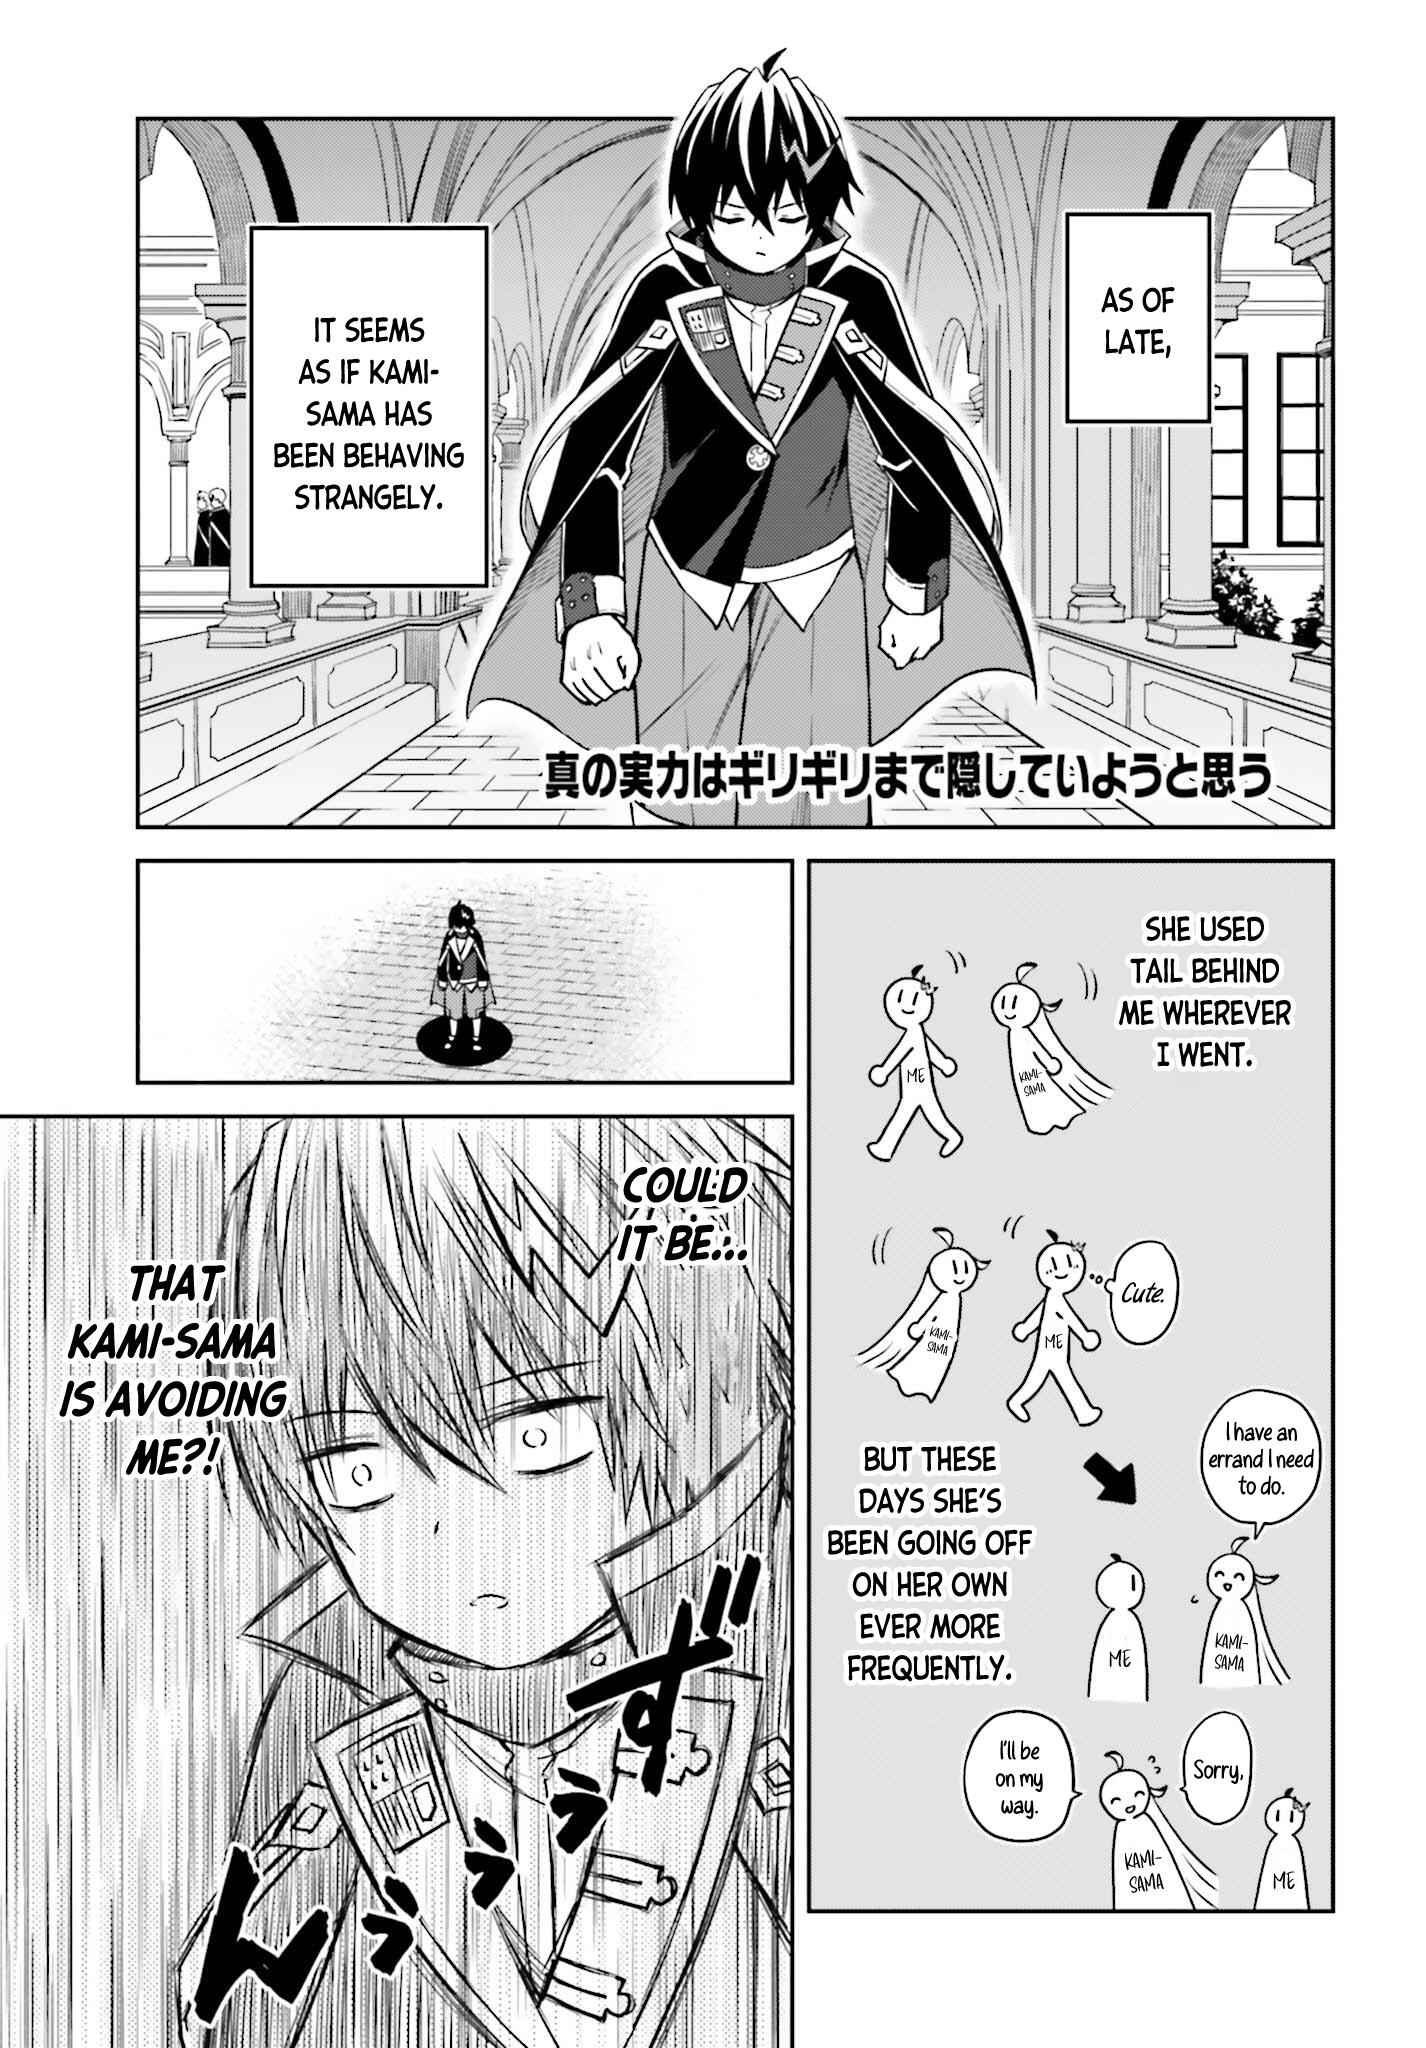 Read Manga I Can Copy Talents - Chapter 28